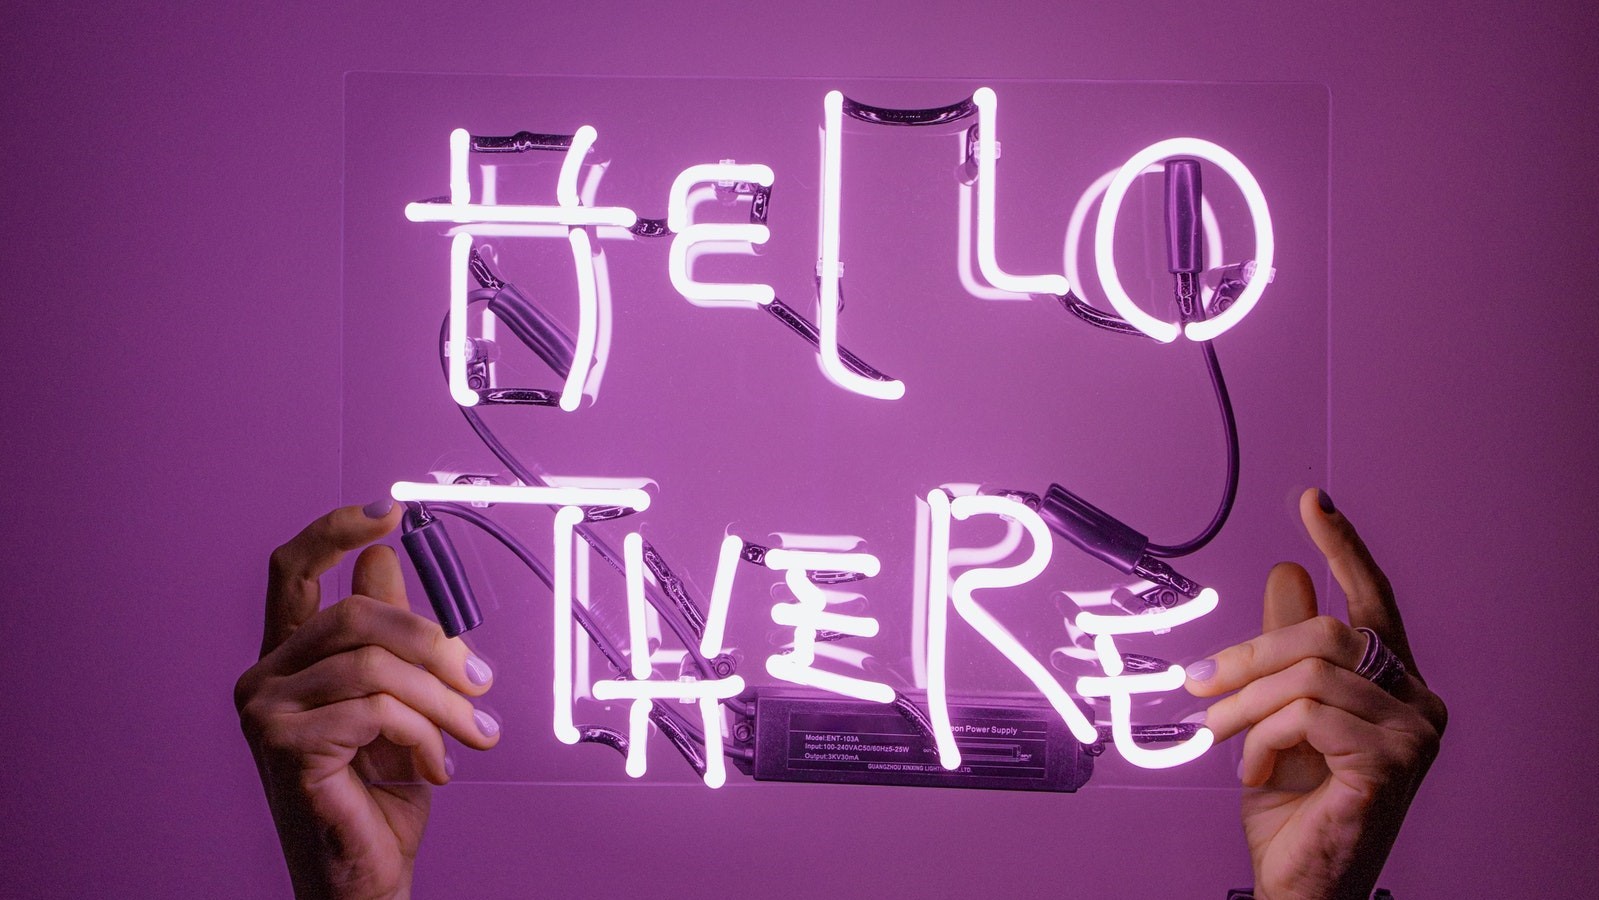 As palavras "hello there" escritas com luzes de neon